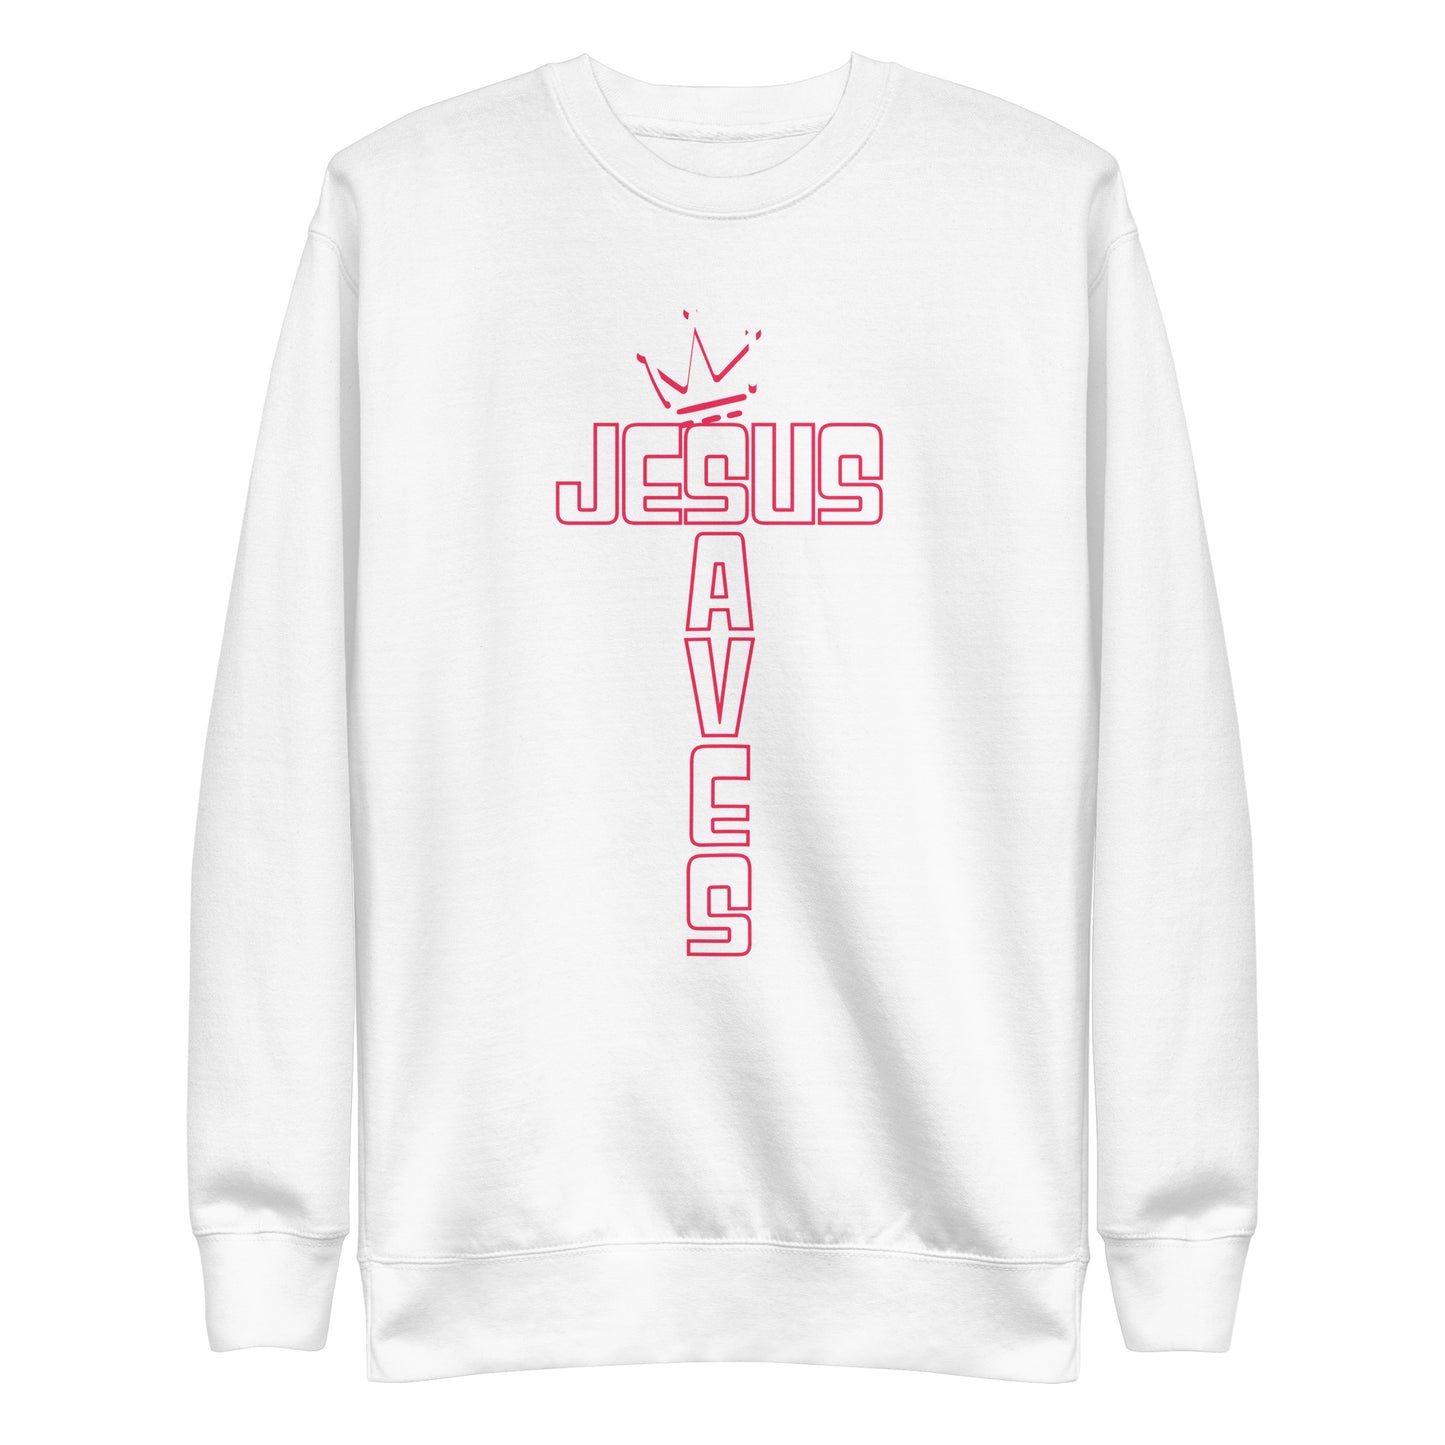 Jesus Saves - White Unisex Premium Sweatshirt